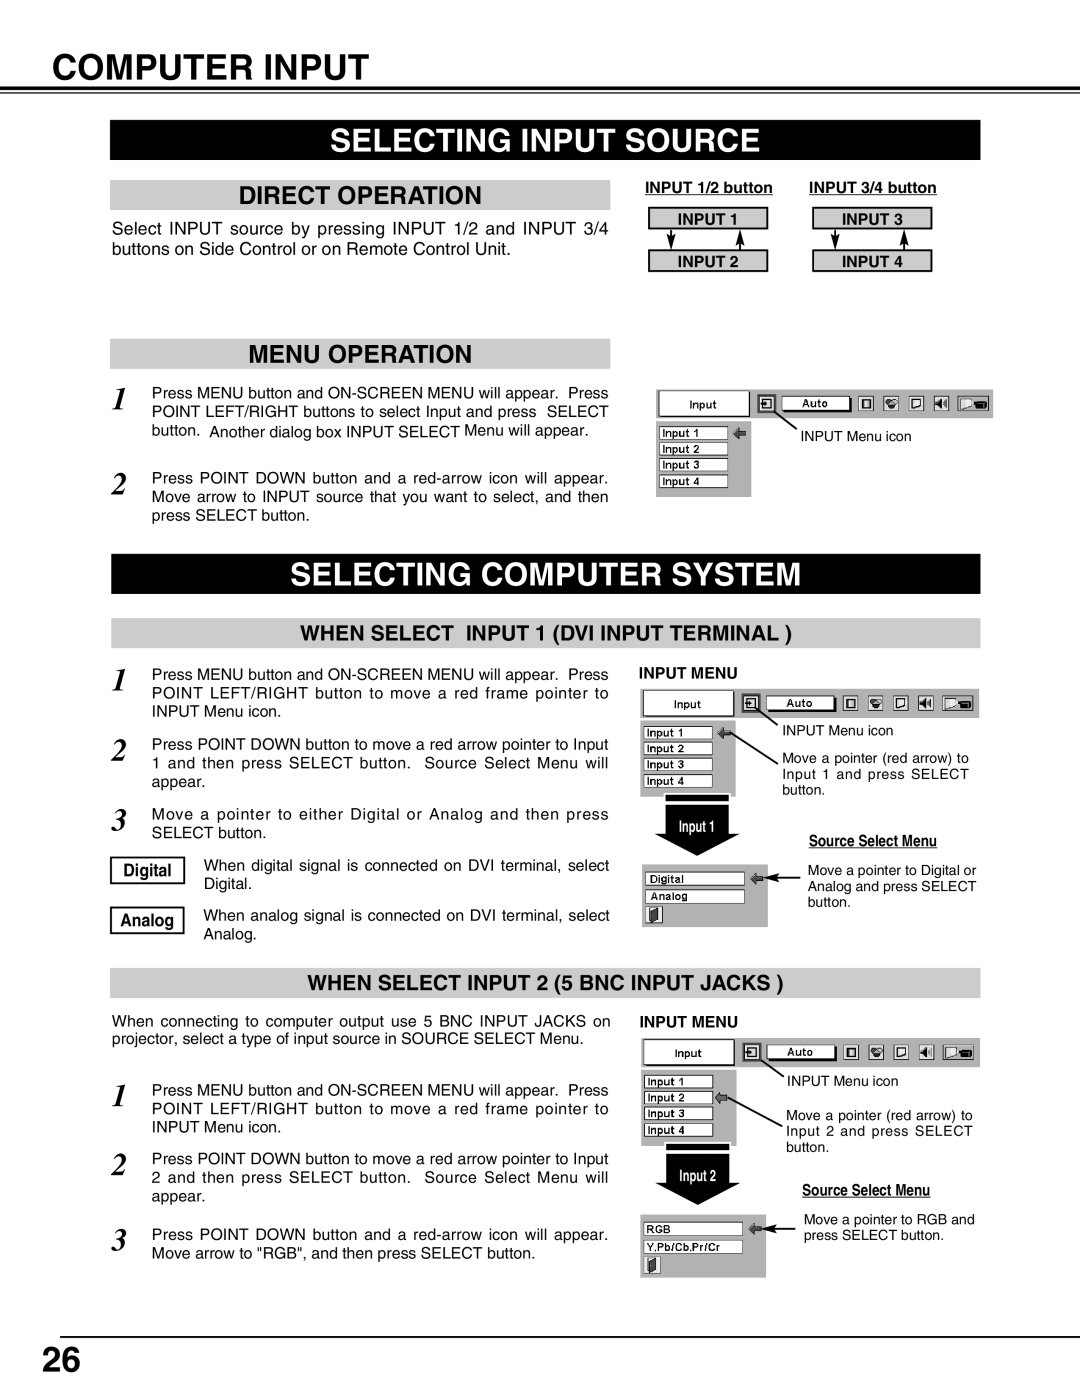 Eiki LC-UXT3 Computer Input, Selecting Input Source, Selecting Computer System, Direct Operation, Menu Operation 